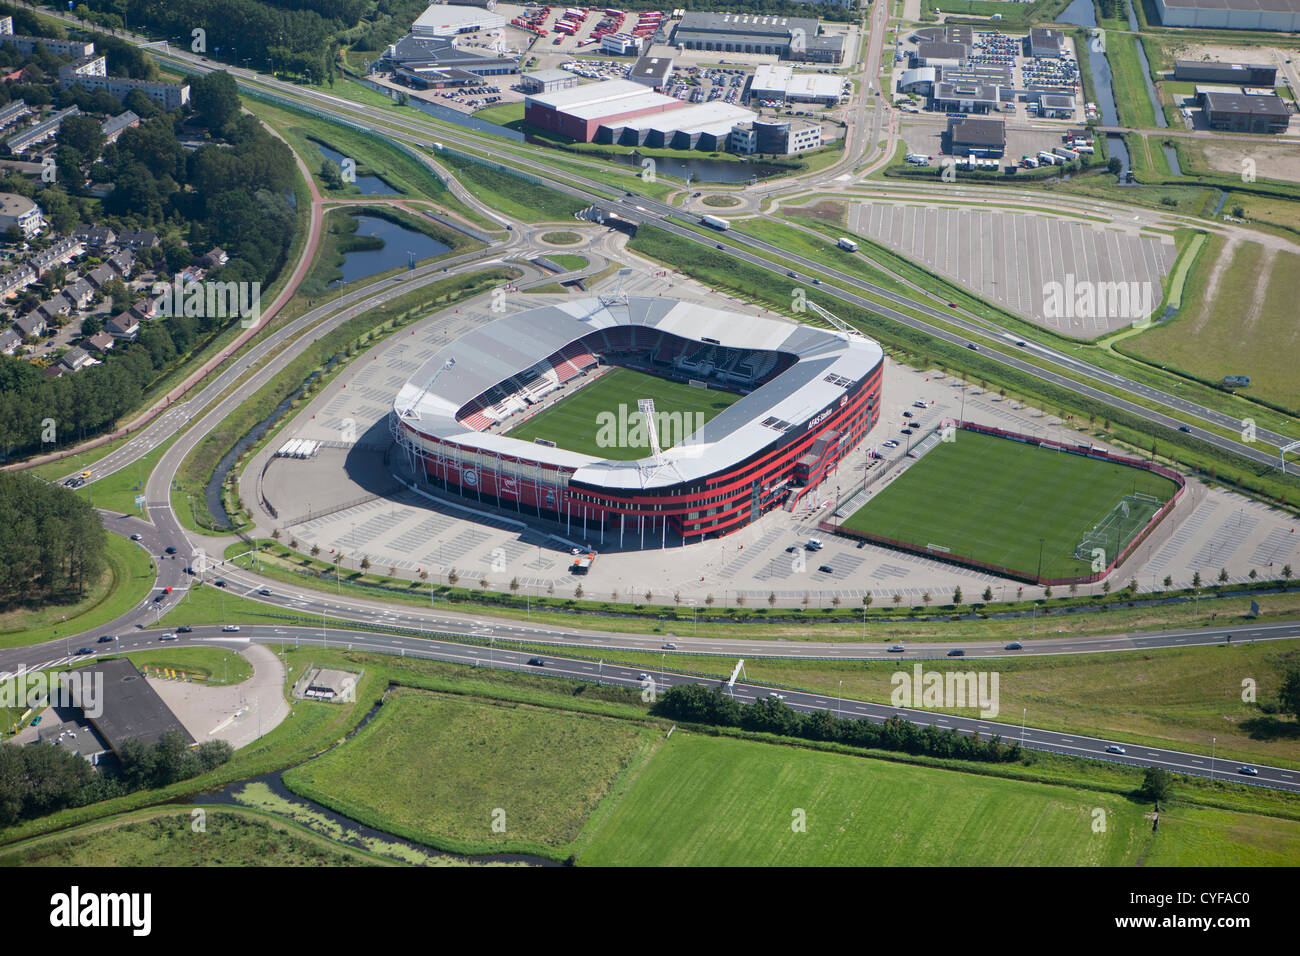 The Netherlands, Alkmaar. Football stadium of AZ. Aerial. Stock Photo